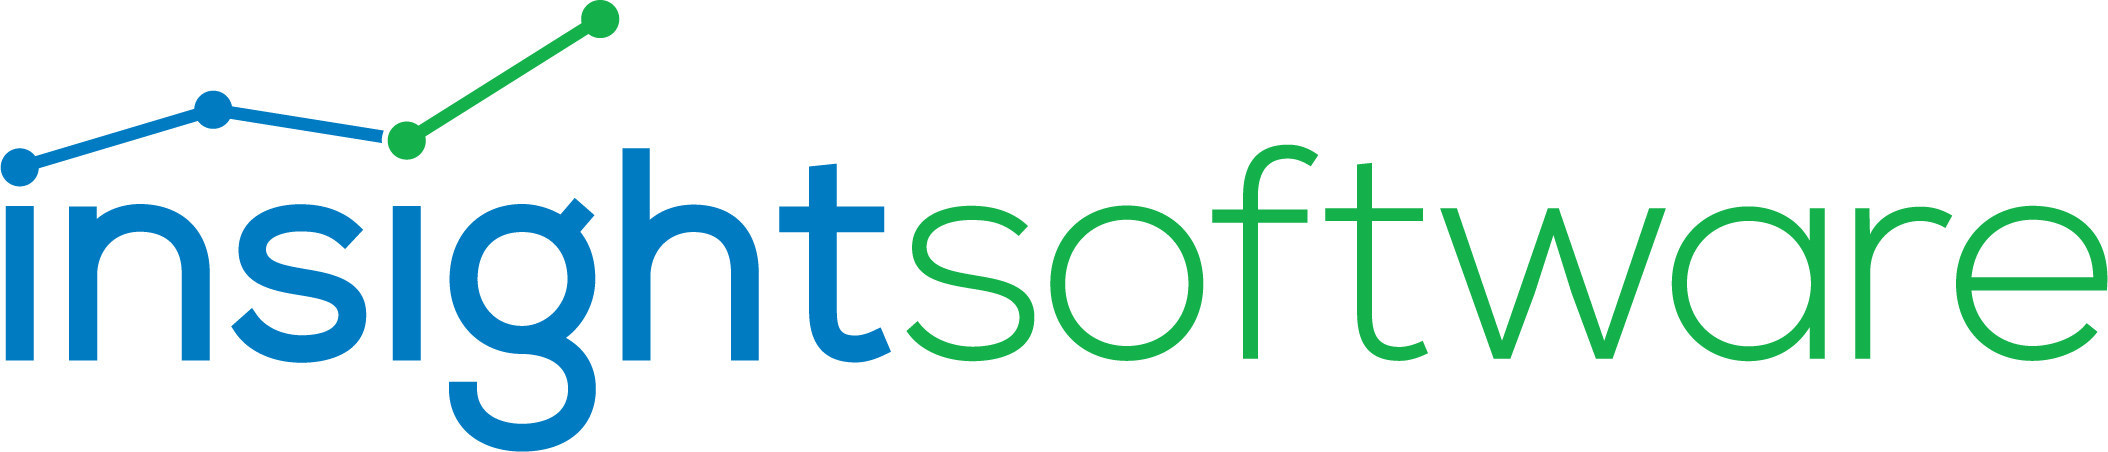 Logo insightssoftware BI & Analytics tools